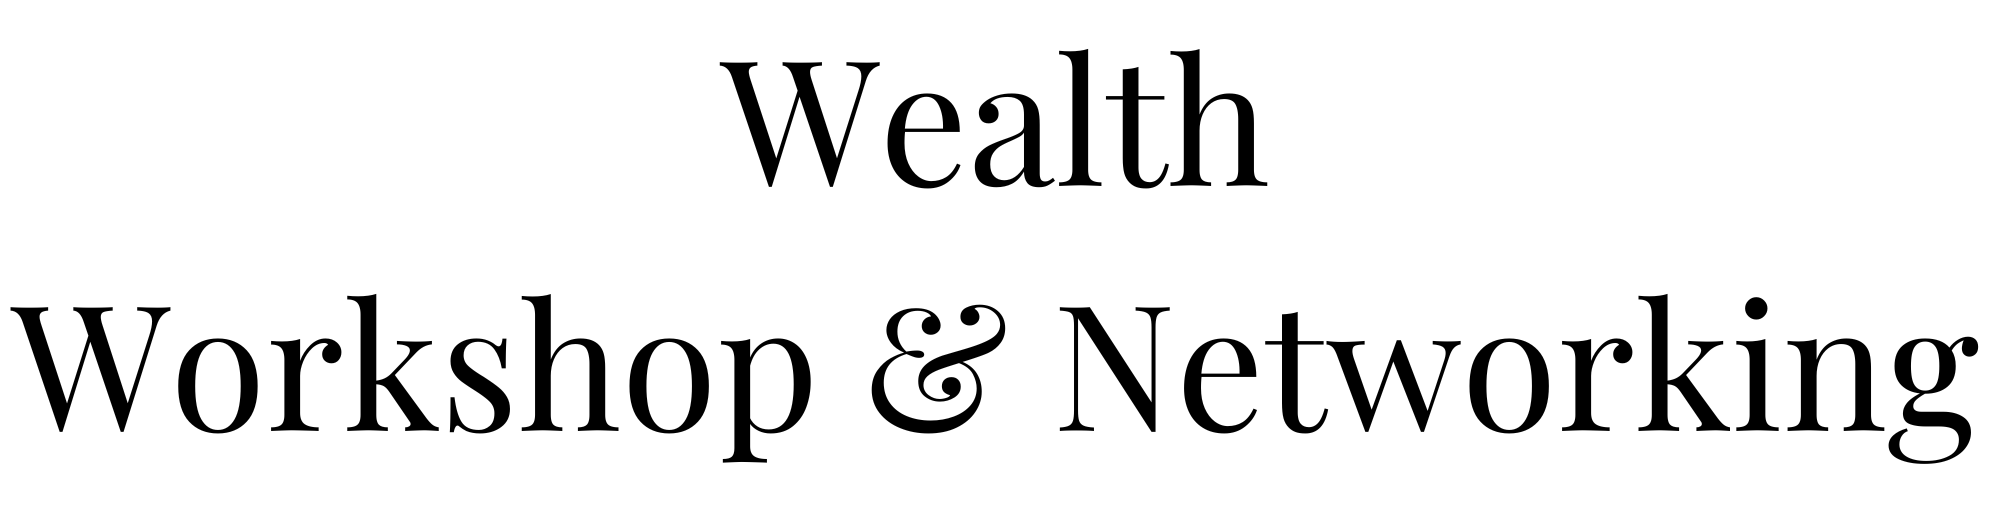 Wealth Workshop & Networking